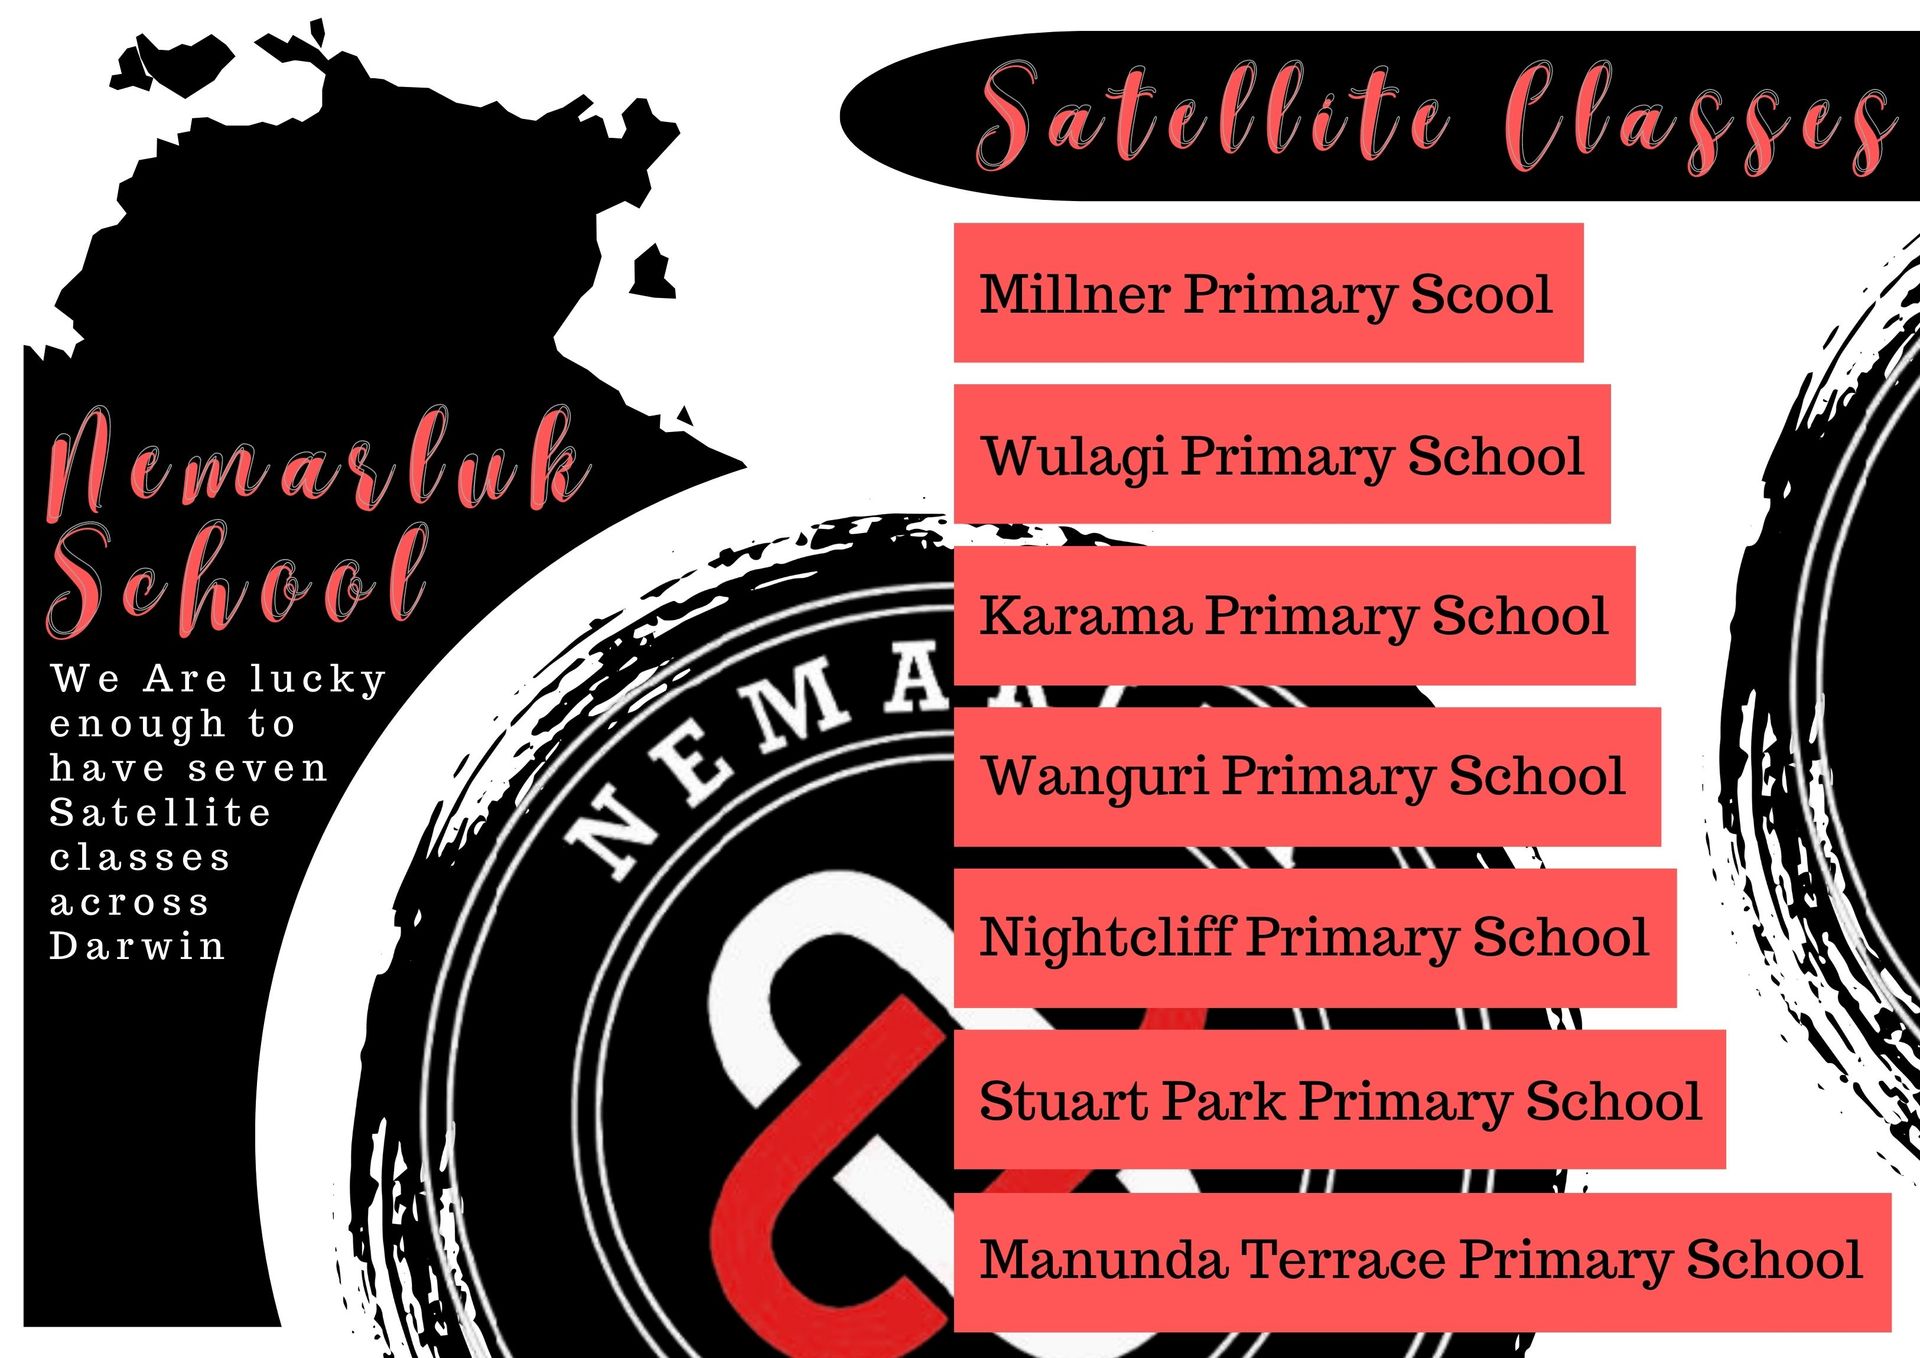 A poster for nemarluk school showing satellite classes